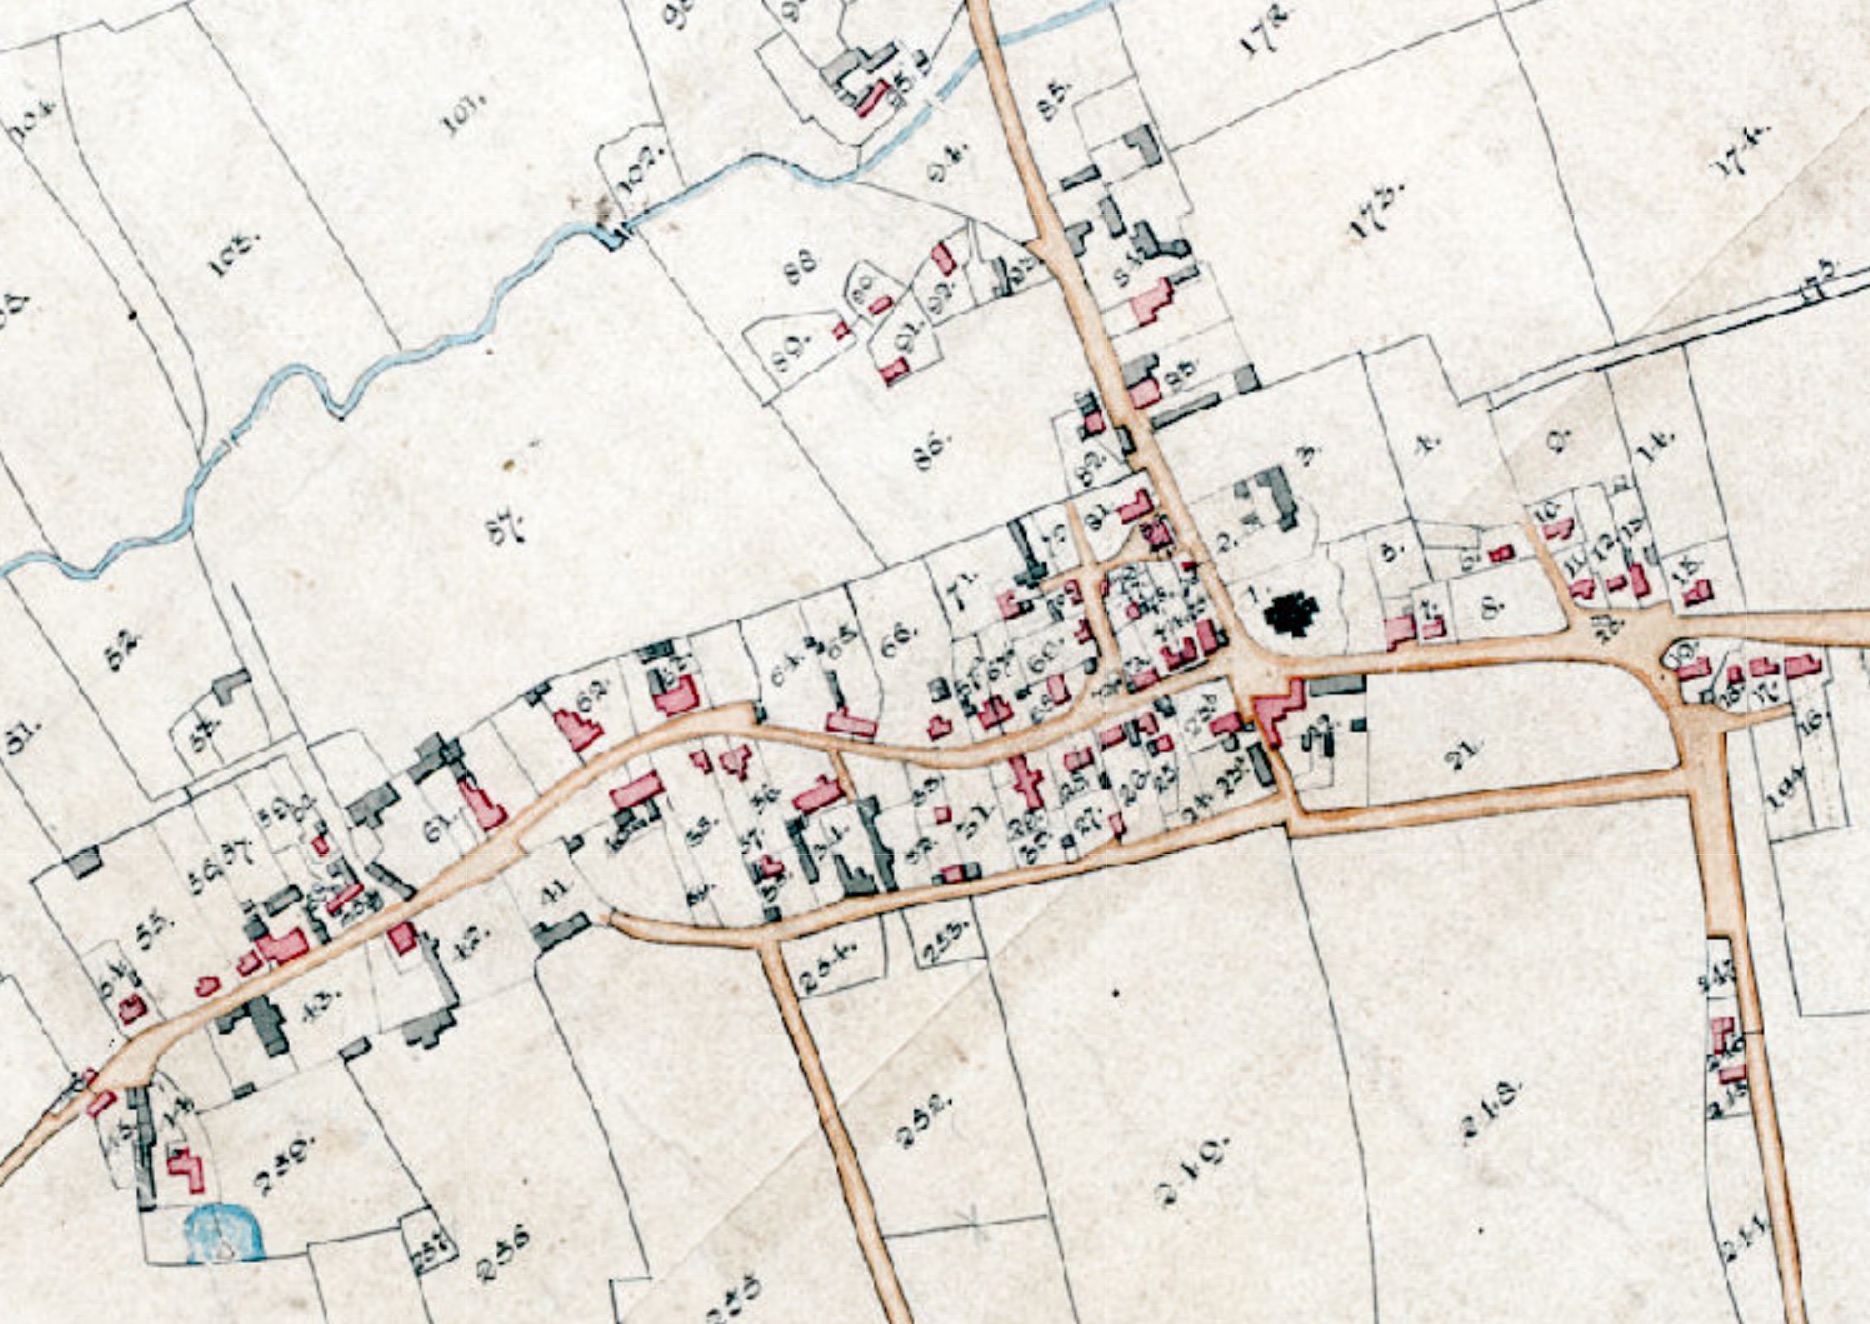 1839 Sutton Benger